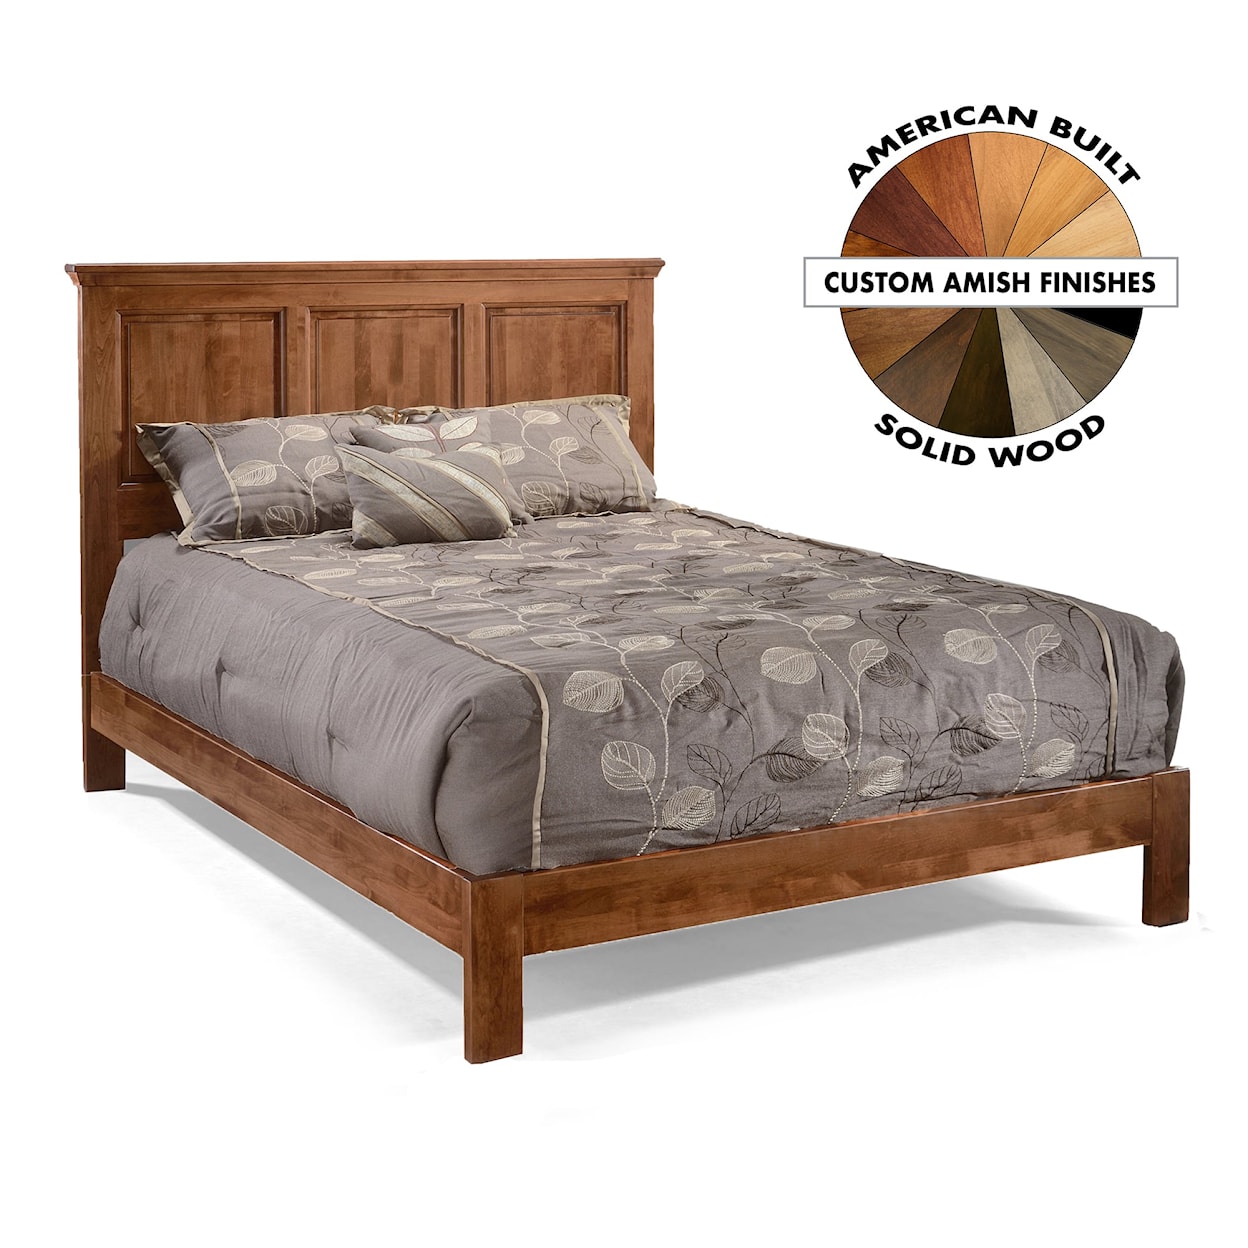 Archbold Furniture Heritage California King Raised Panel Bed